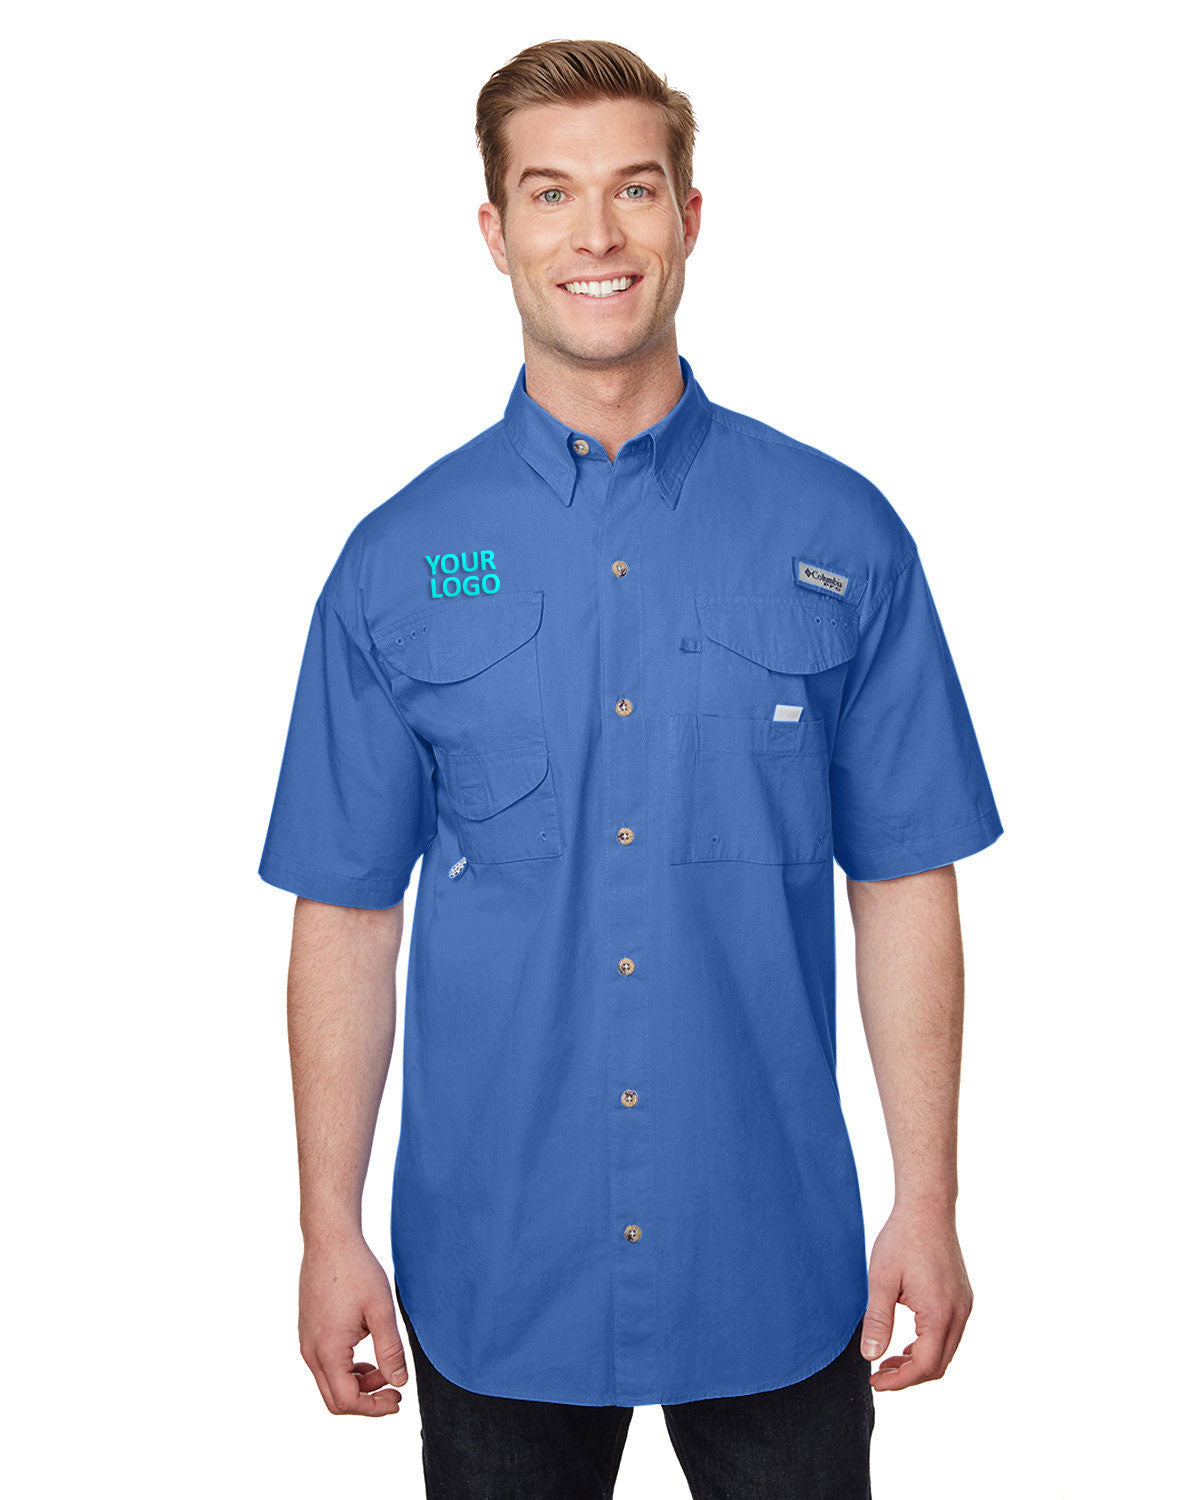 Columbia Vivid Blue 7130 logo shirts